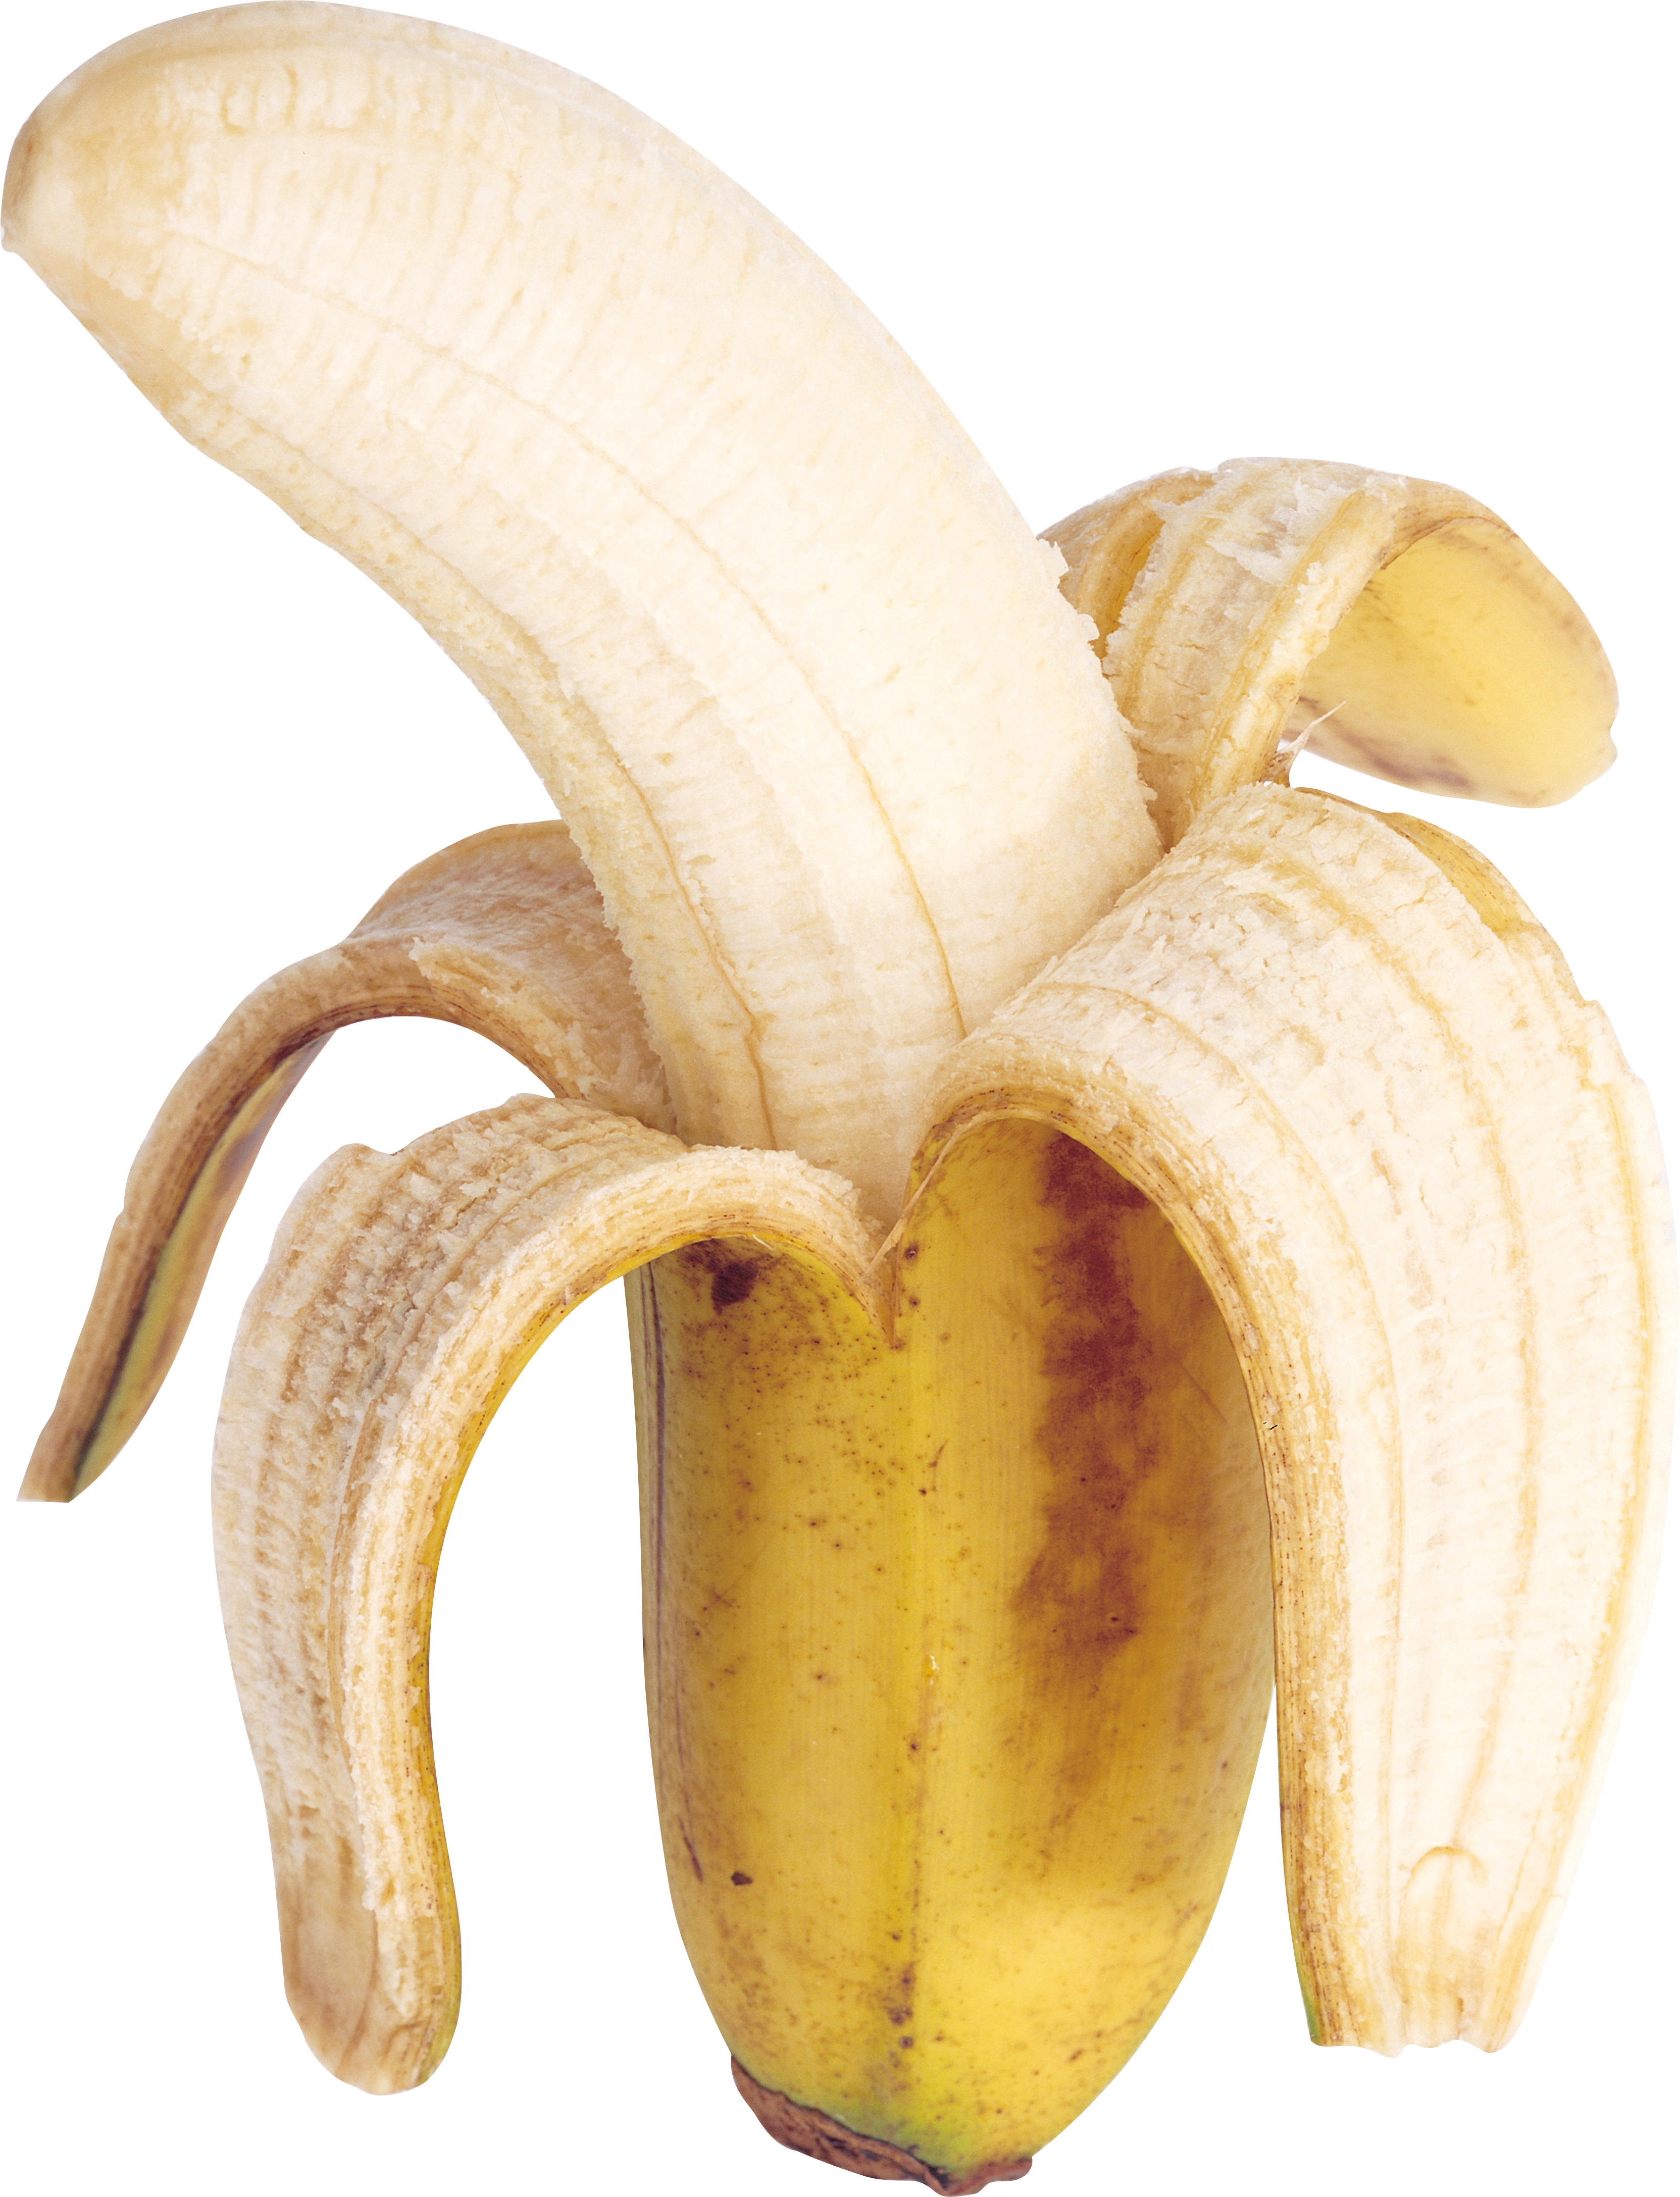 Banane pelée